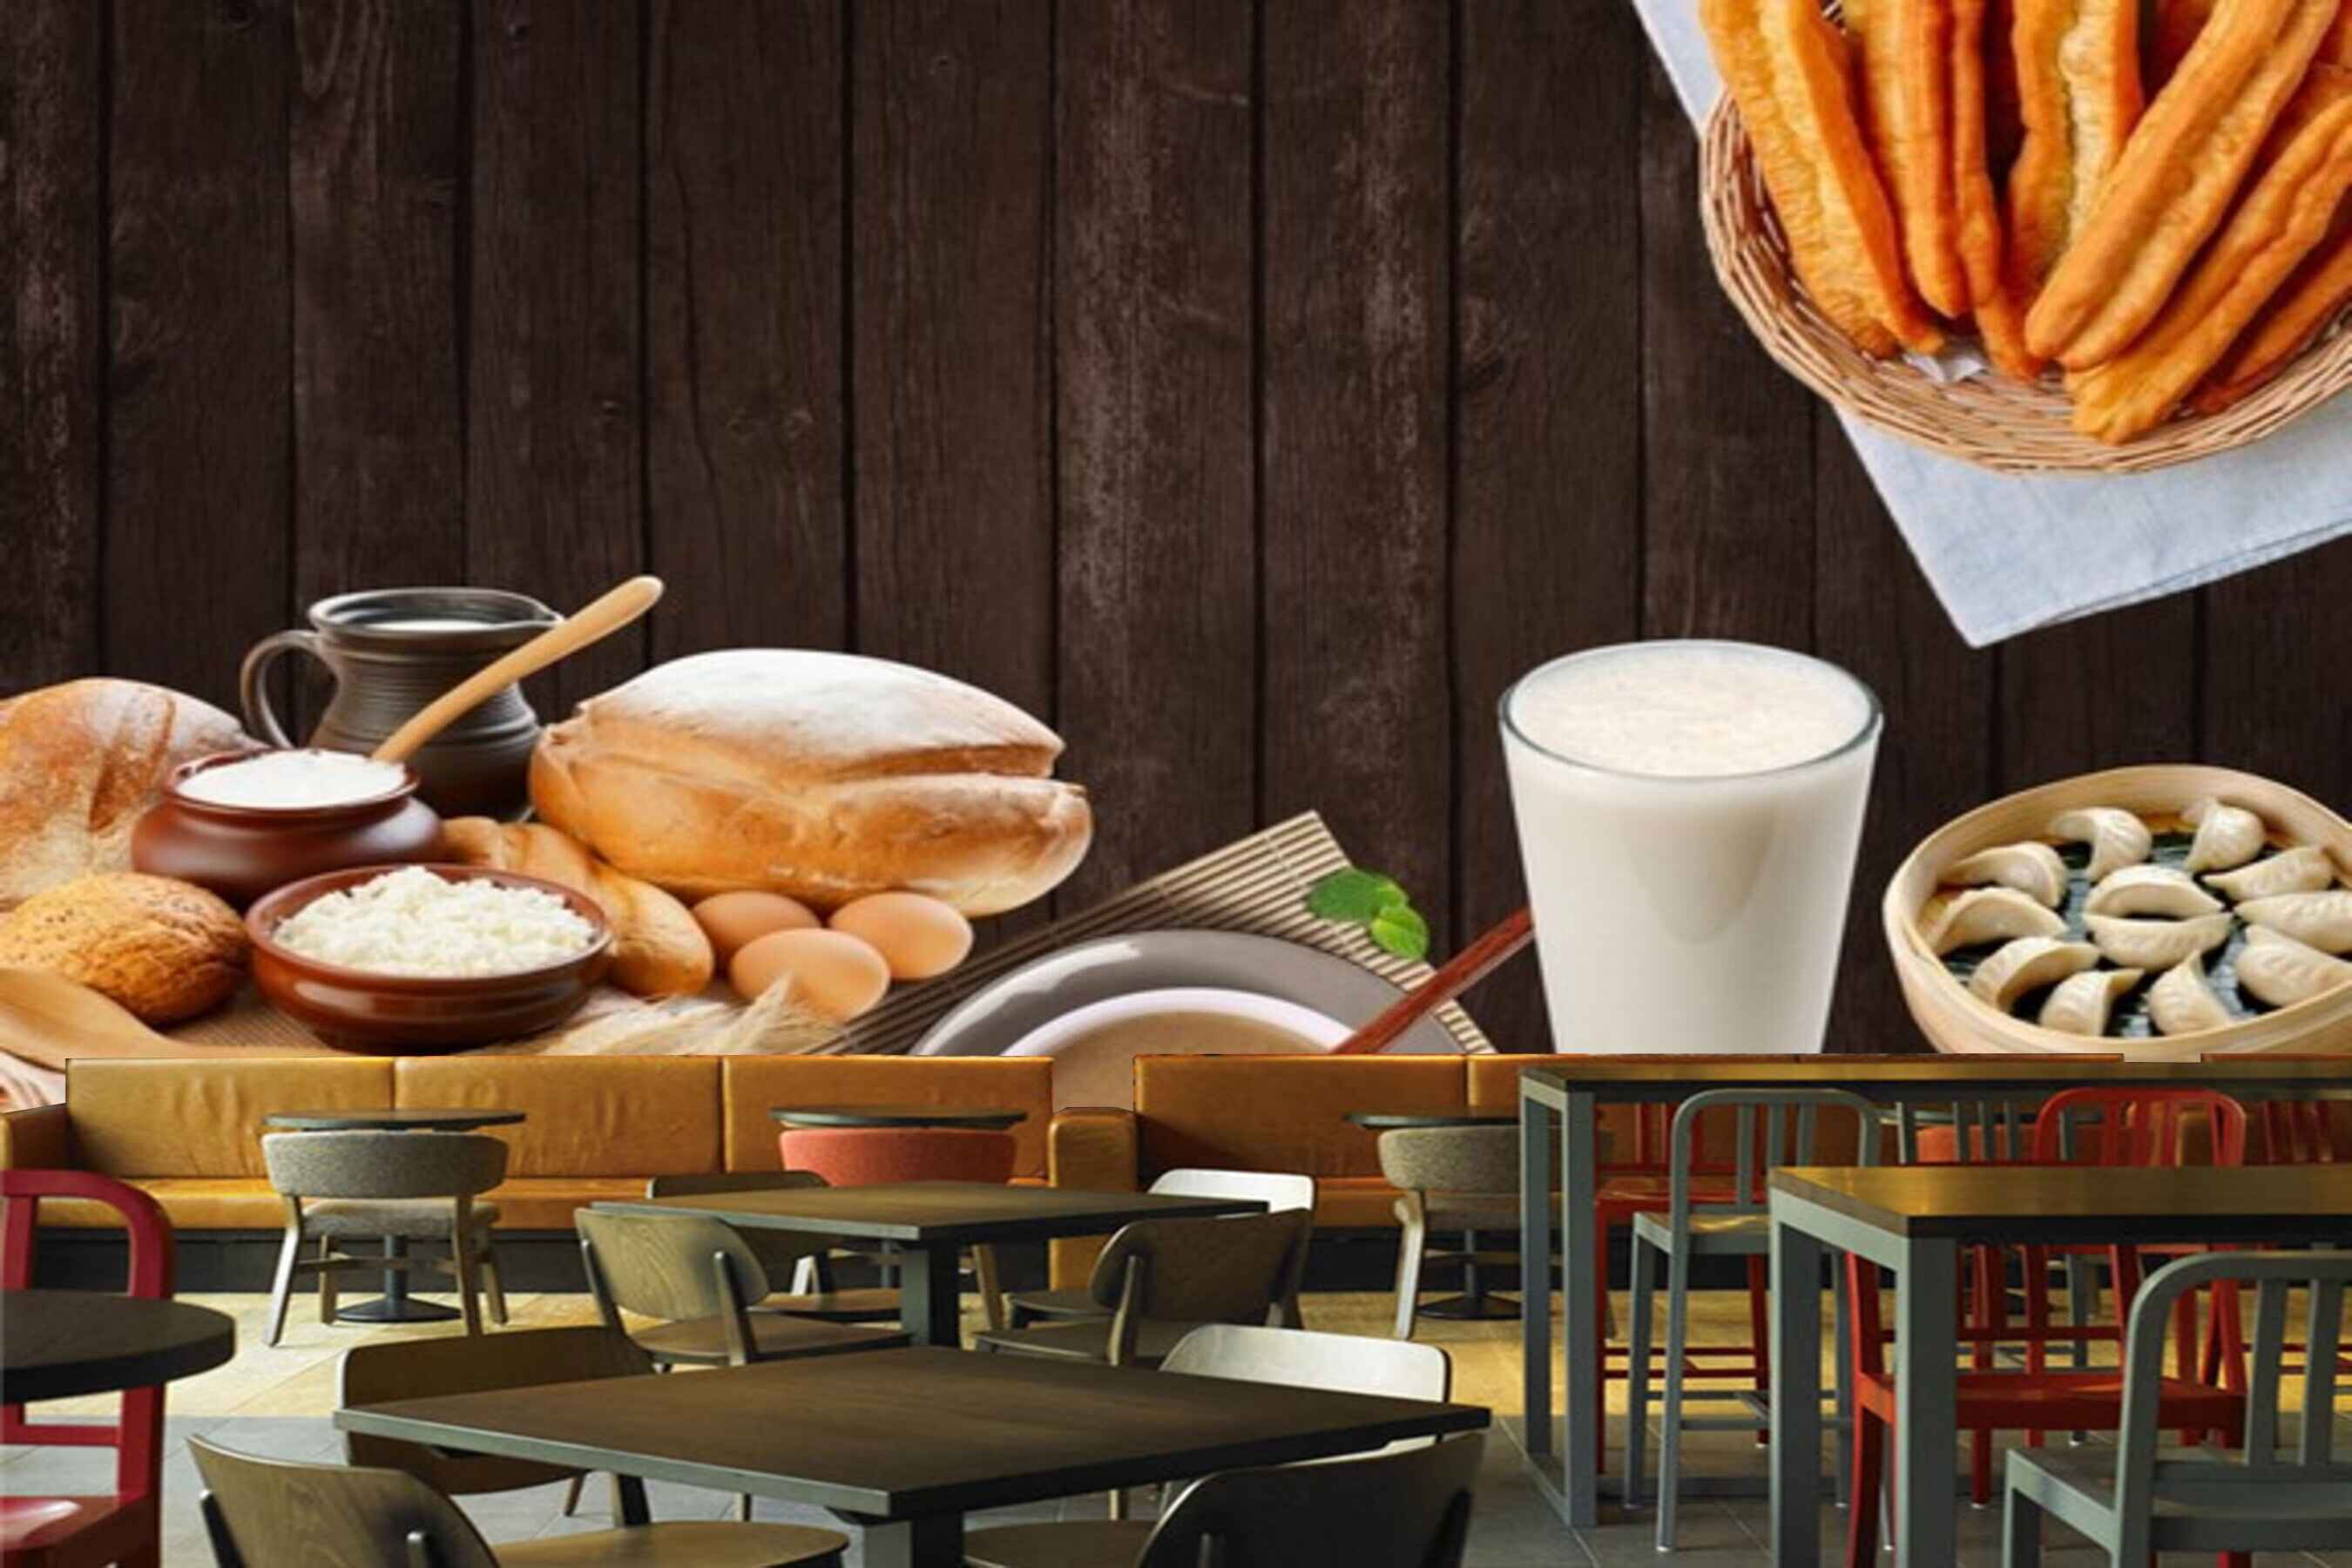 Avikalp MWZ3132 Milk Buns Breads Sugar HD Wallpaper for Cafe Restaurant